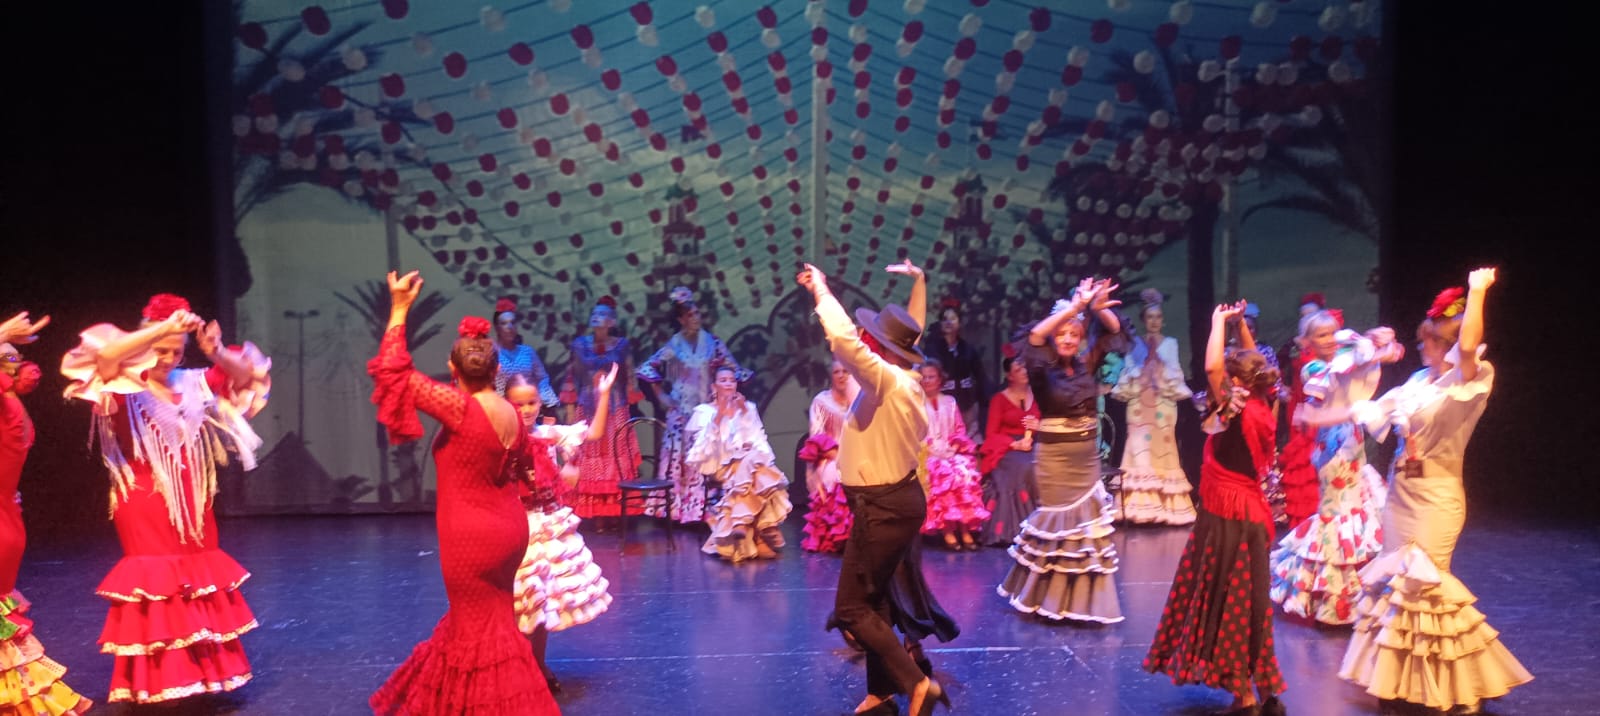 Clases de flamenco en Zaragoza